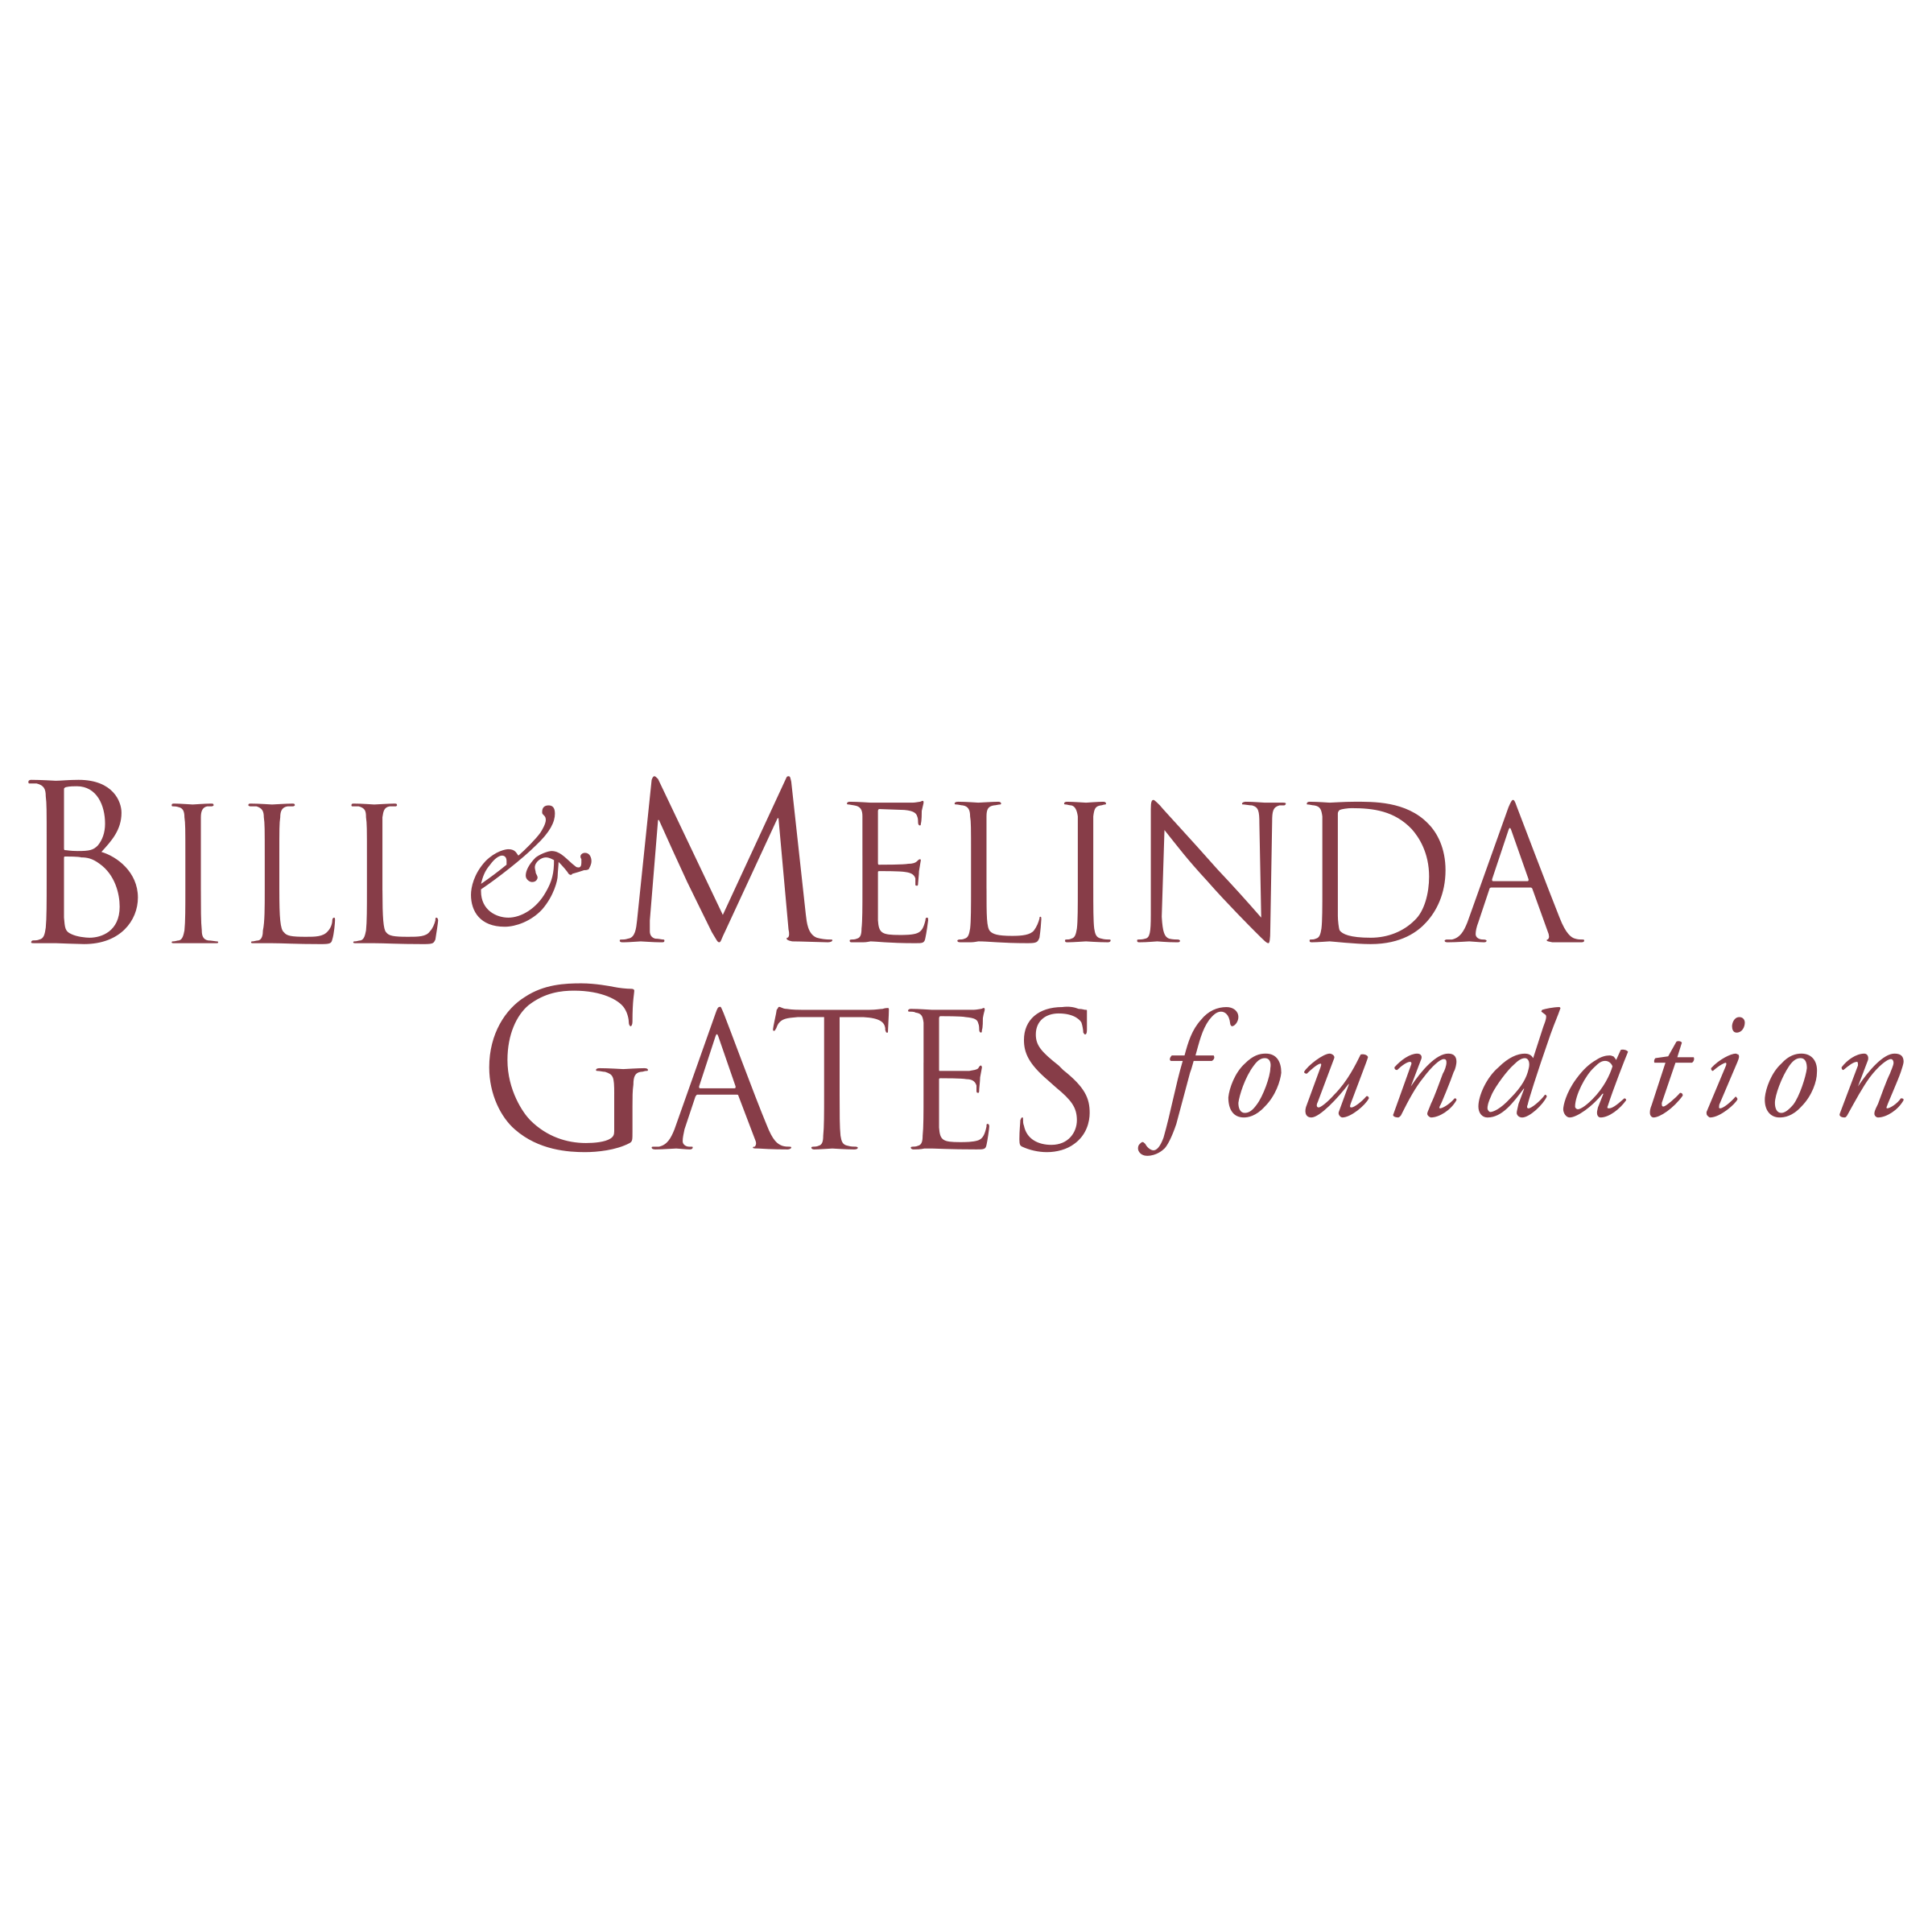 Fondation Bill & Melinda Gates